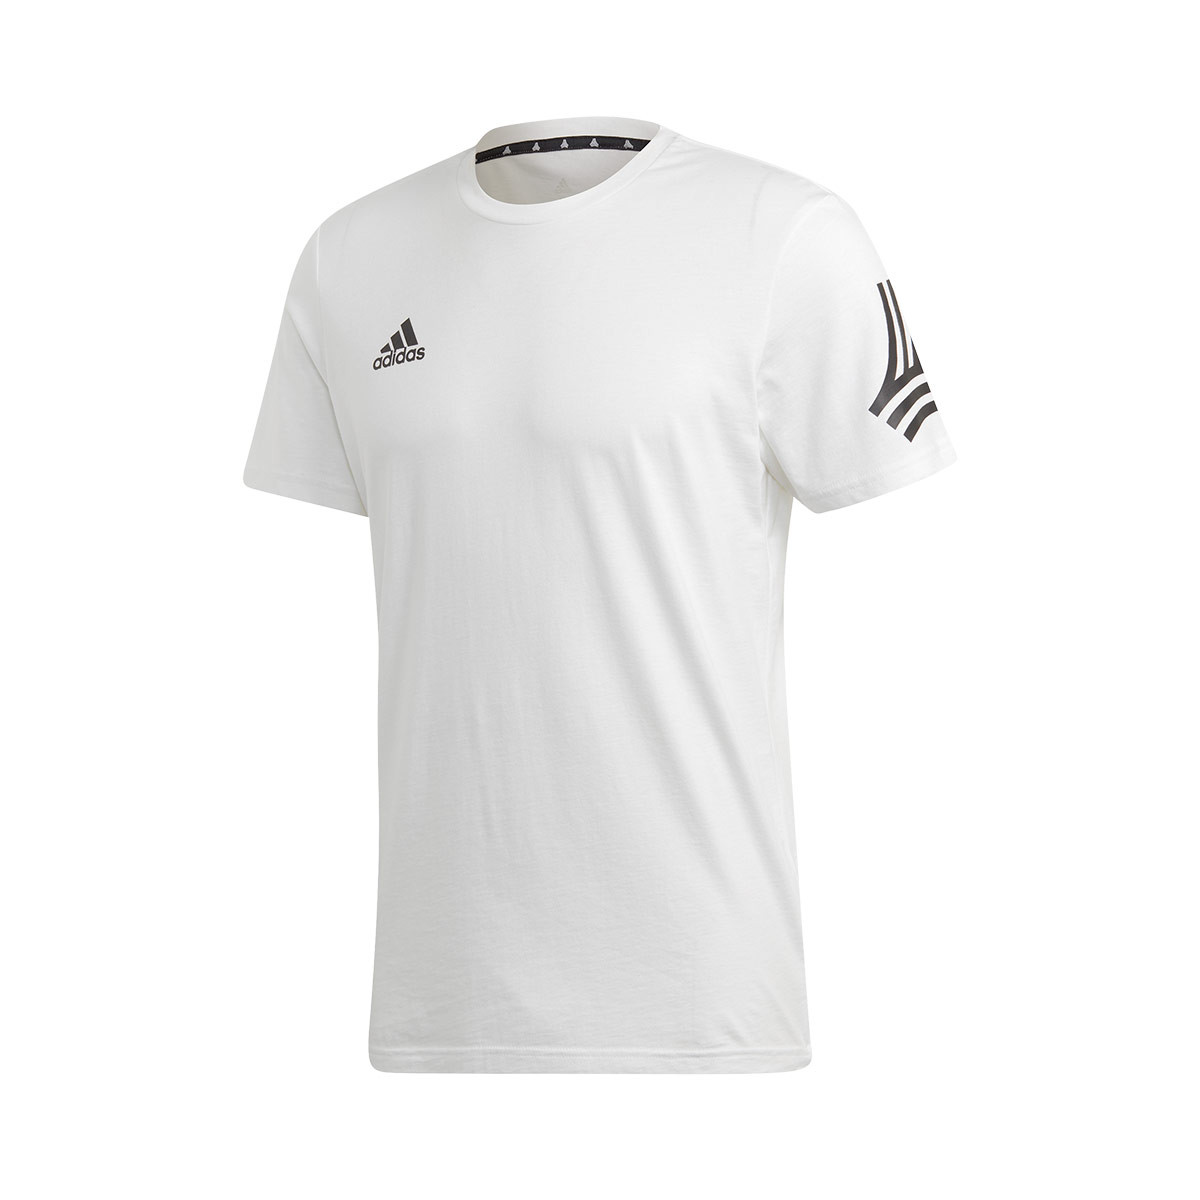 Jersey adidas Tango Logo White - Football store Fútbol Emotion